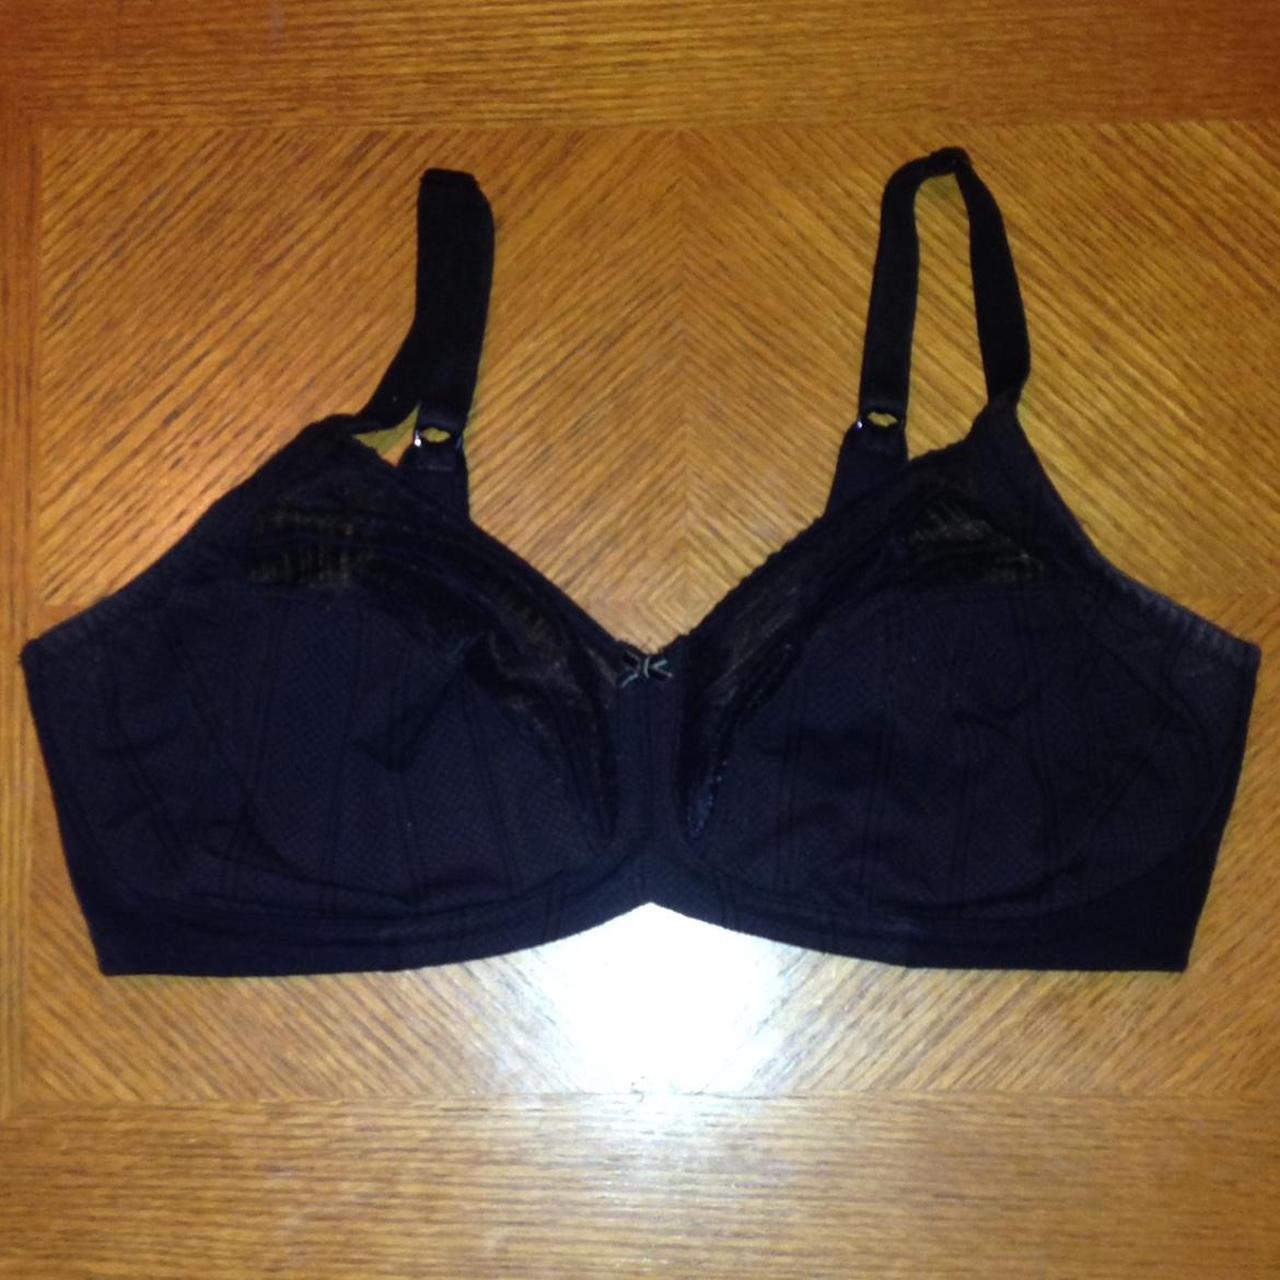 Product Image 1 - #lilyette black bra
size 36dd
no padding